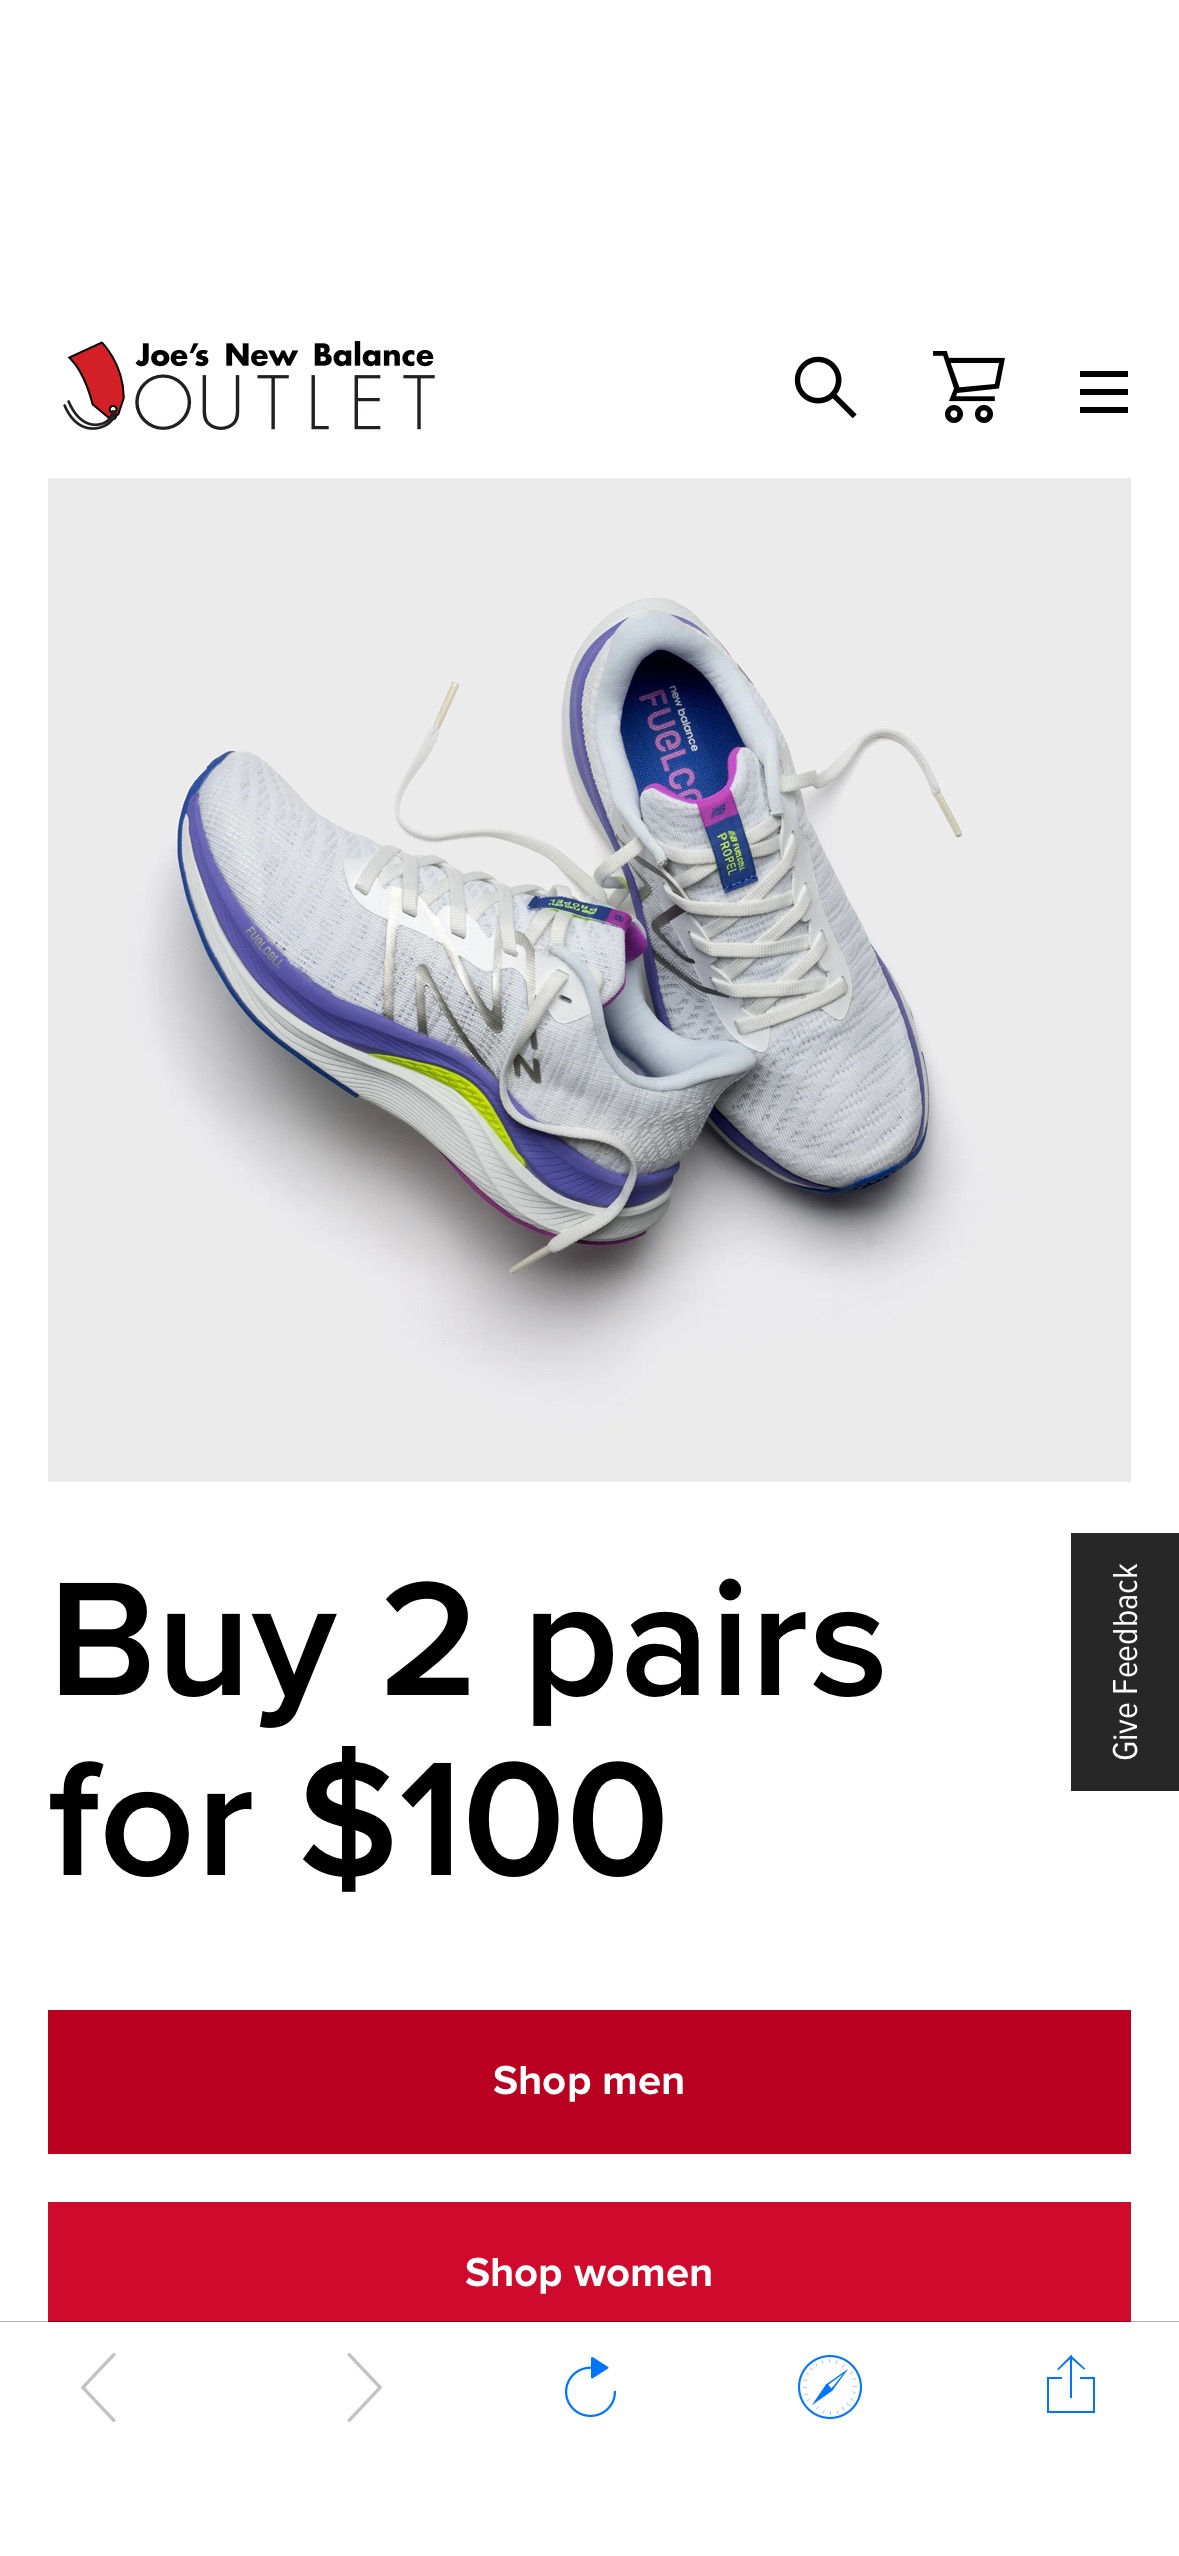 Joe’s New Balance Outlet Sale | 2 for $100 Men’s & Women’s Sneakers